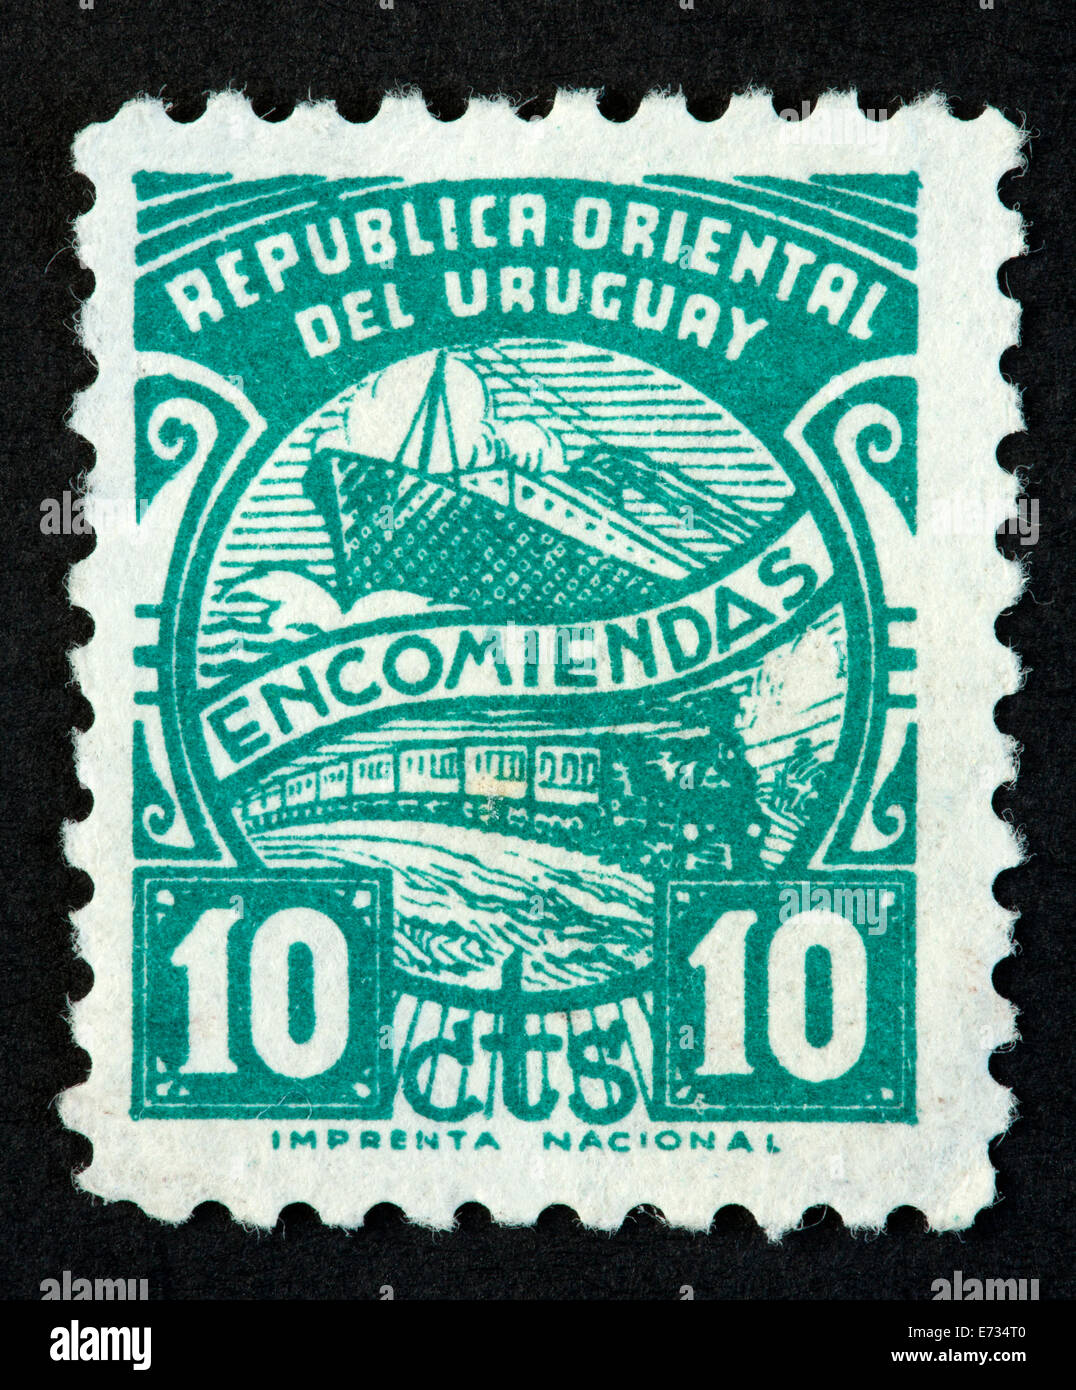 Uruguay postage stamp Stock Photo